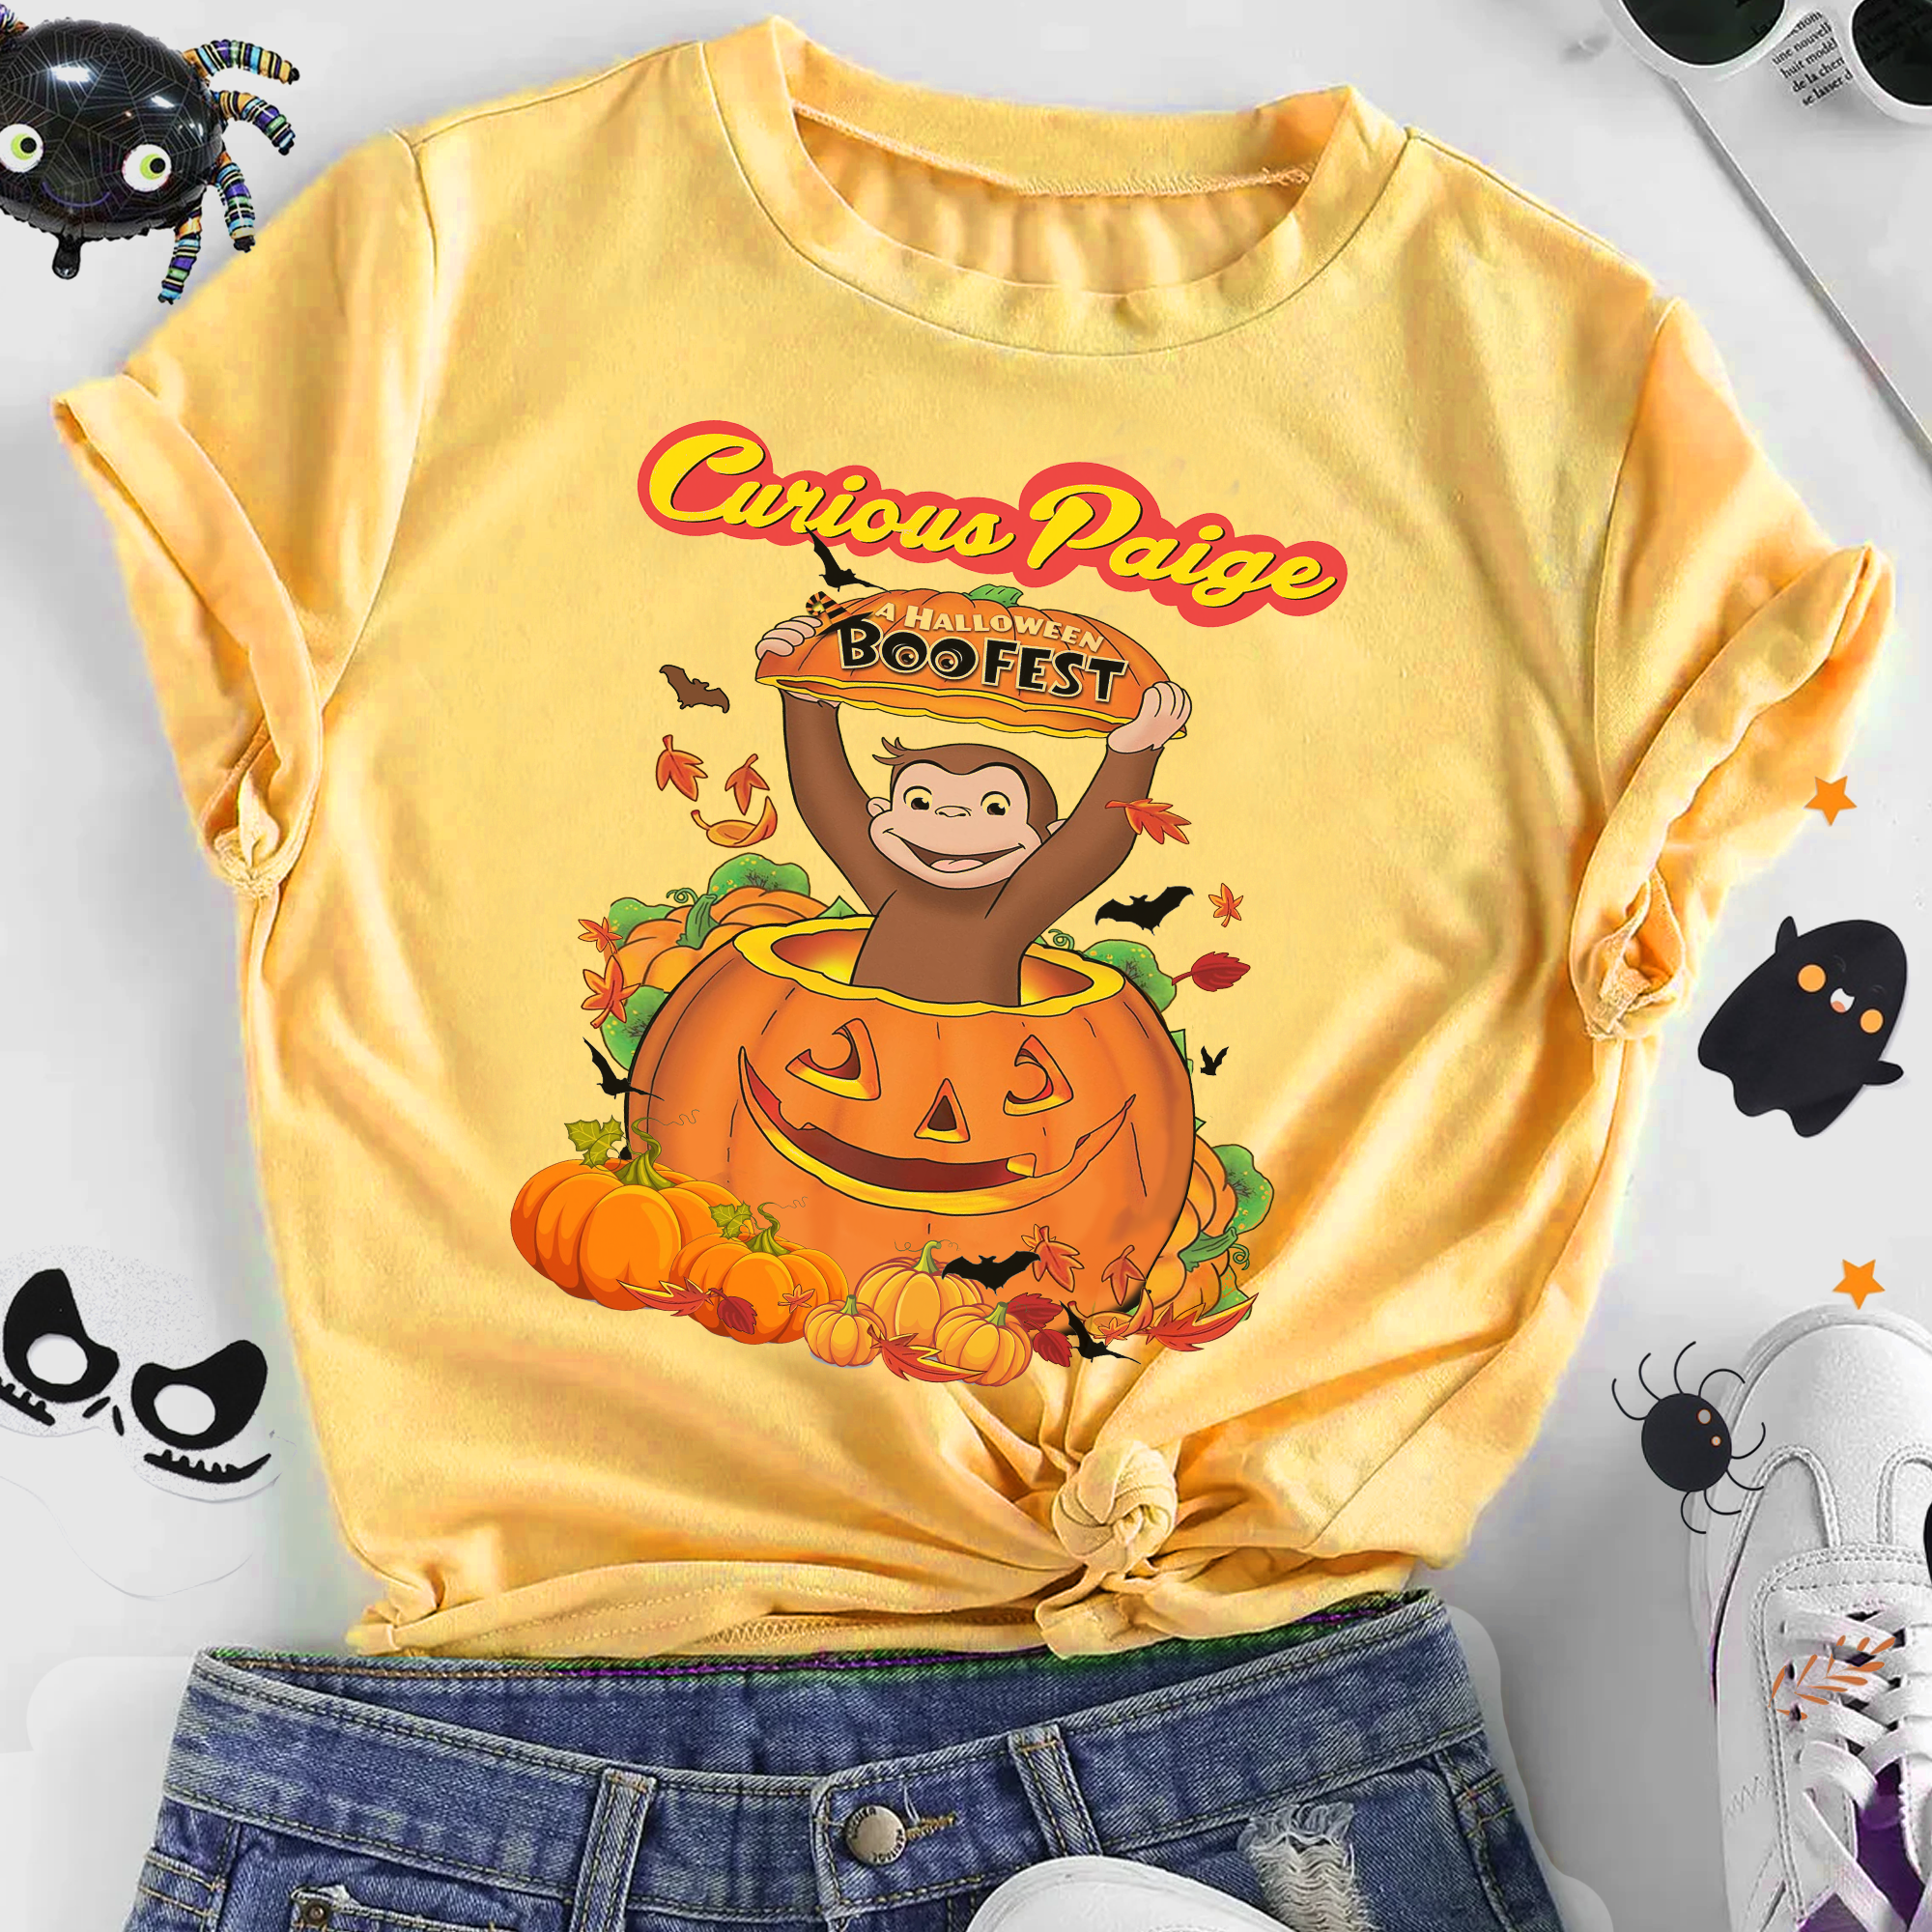 Curious George Shirt, Curious George Halloween Kids Shirt, Curious George Pumpkin Shirt, A Halloween Boofest Shirt,